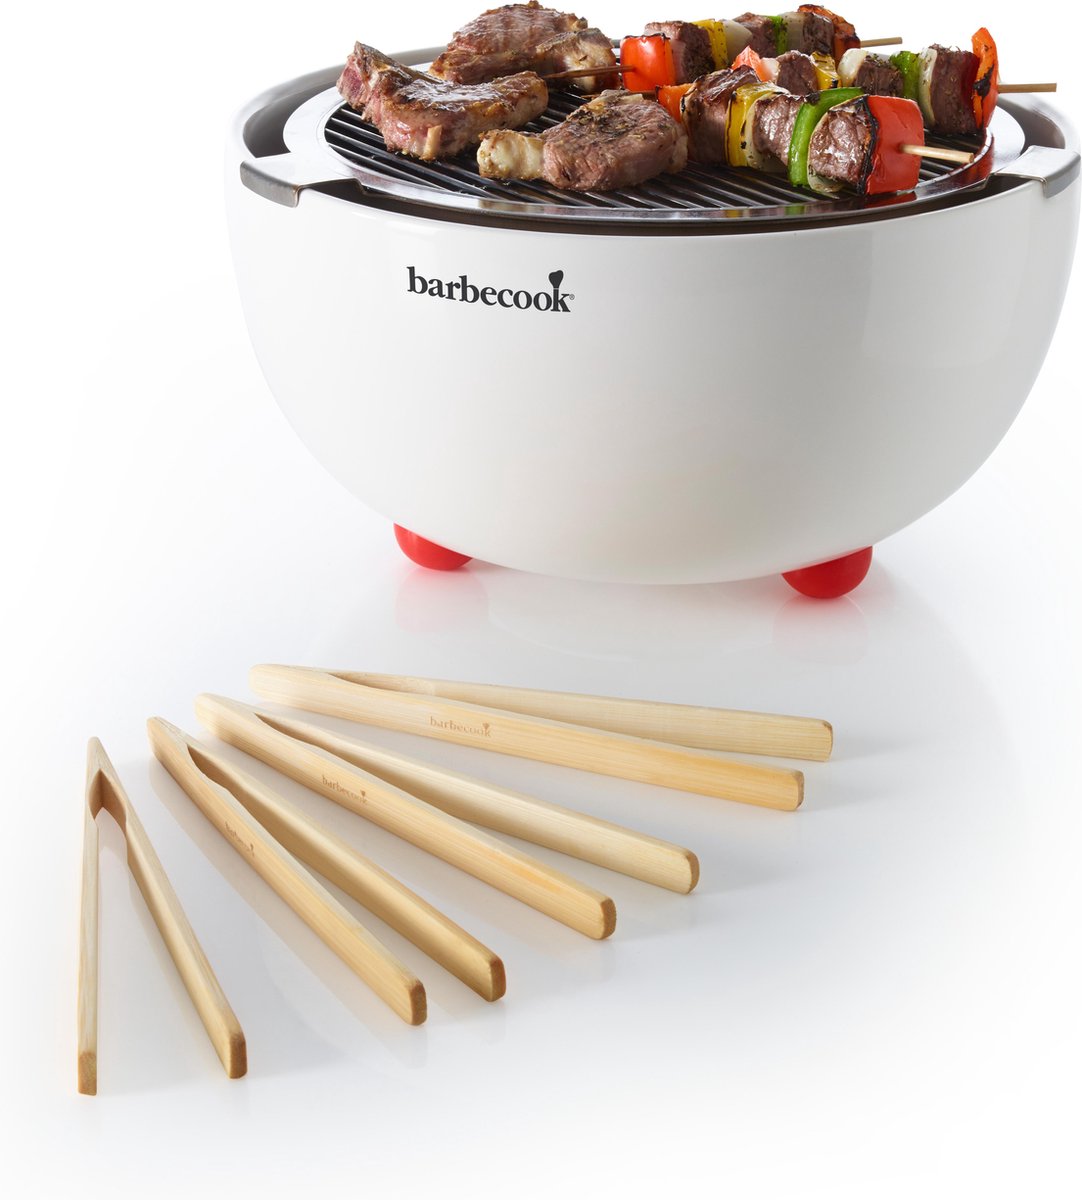 Barbecook Joya Startpakket Houtskoolbarbecue - Wit | bol.com